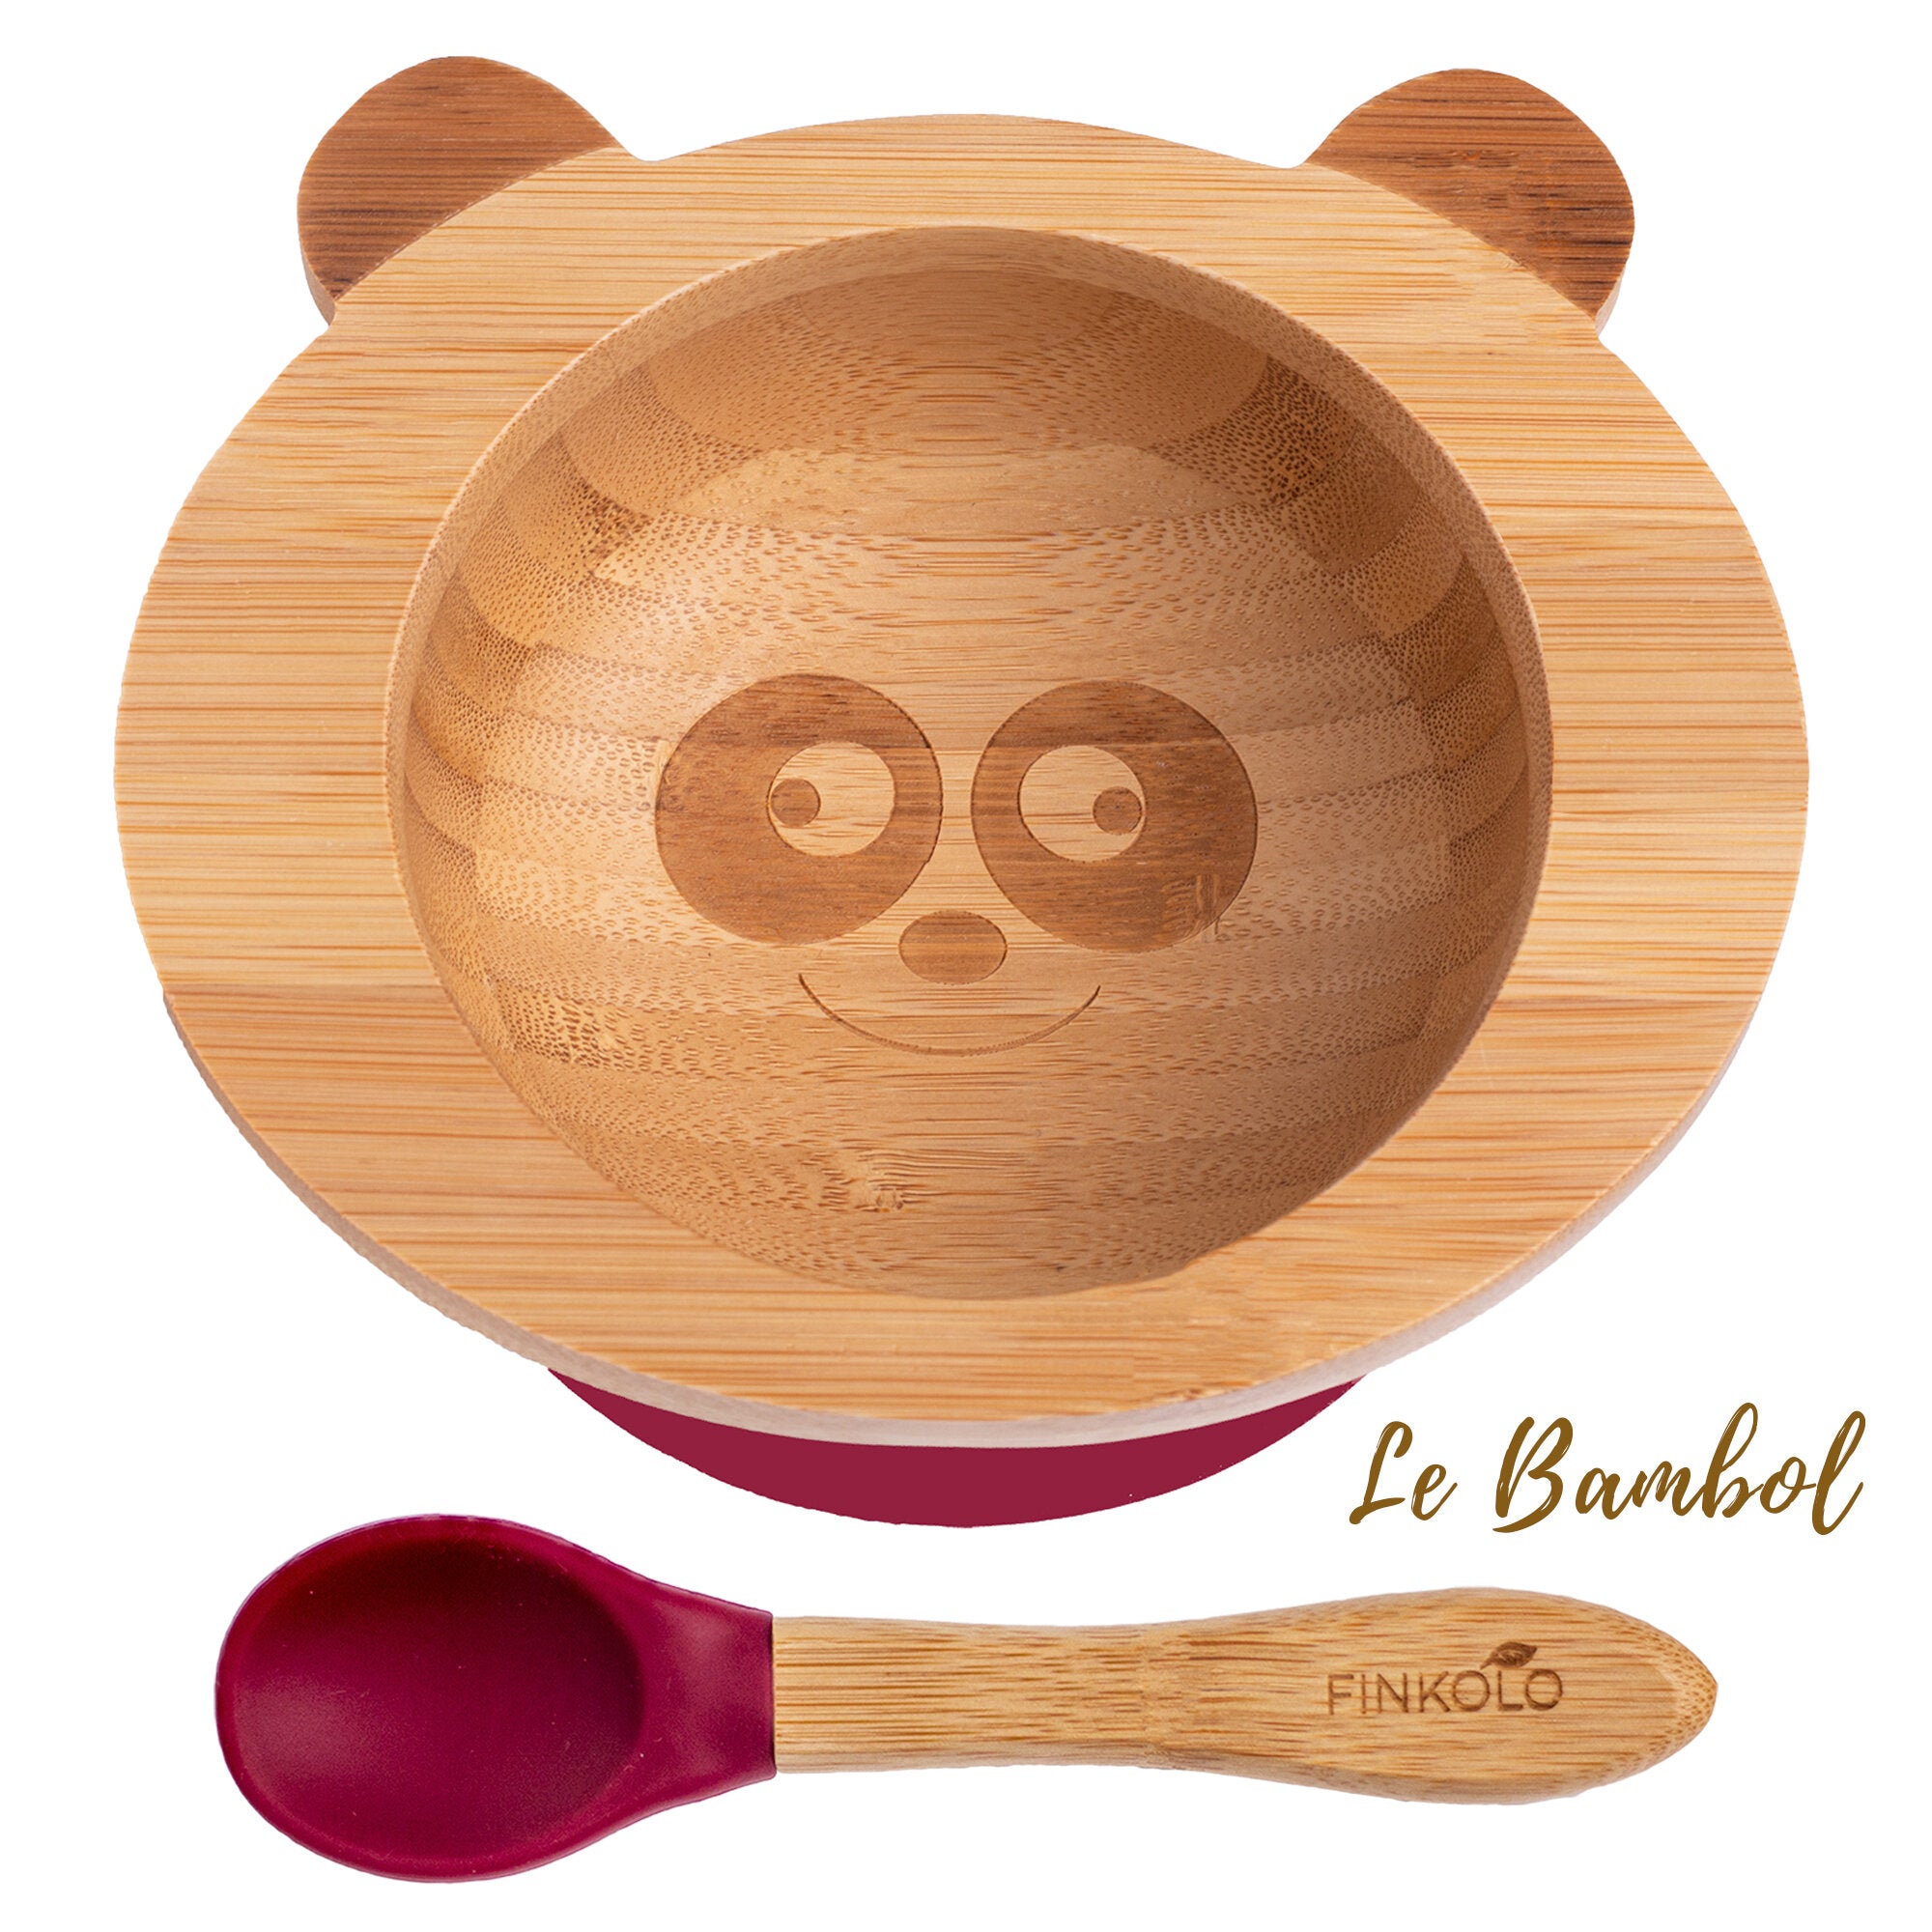 Le Bambol - "Poppy" Panda